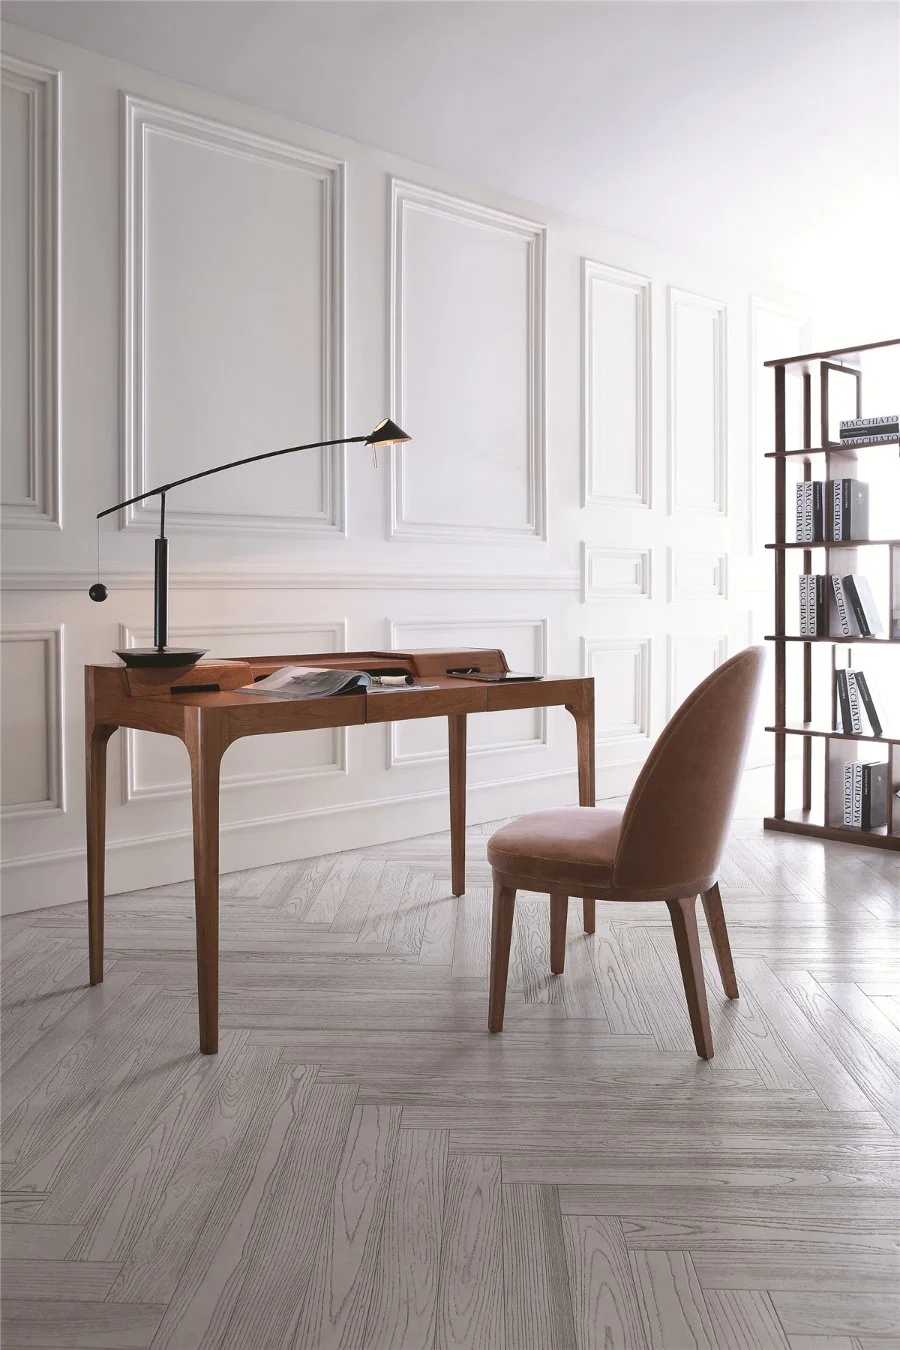 Zhida Foshan Factory Wholesale Hotel Furniture Modern Design Villa Bedroom Home Office Walnut Solid Wood Study Desk for Study Room